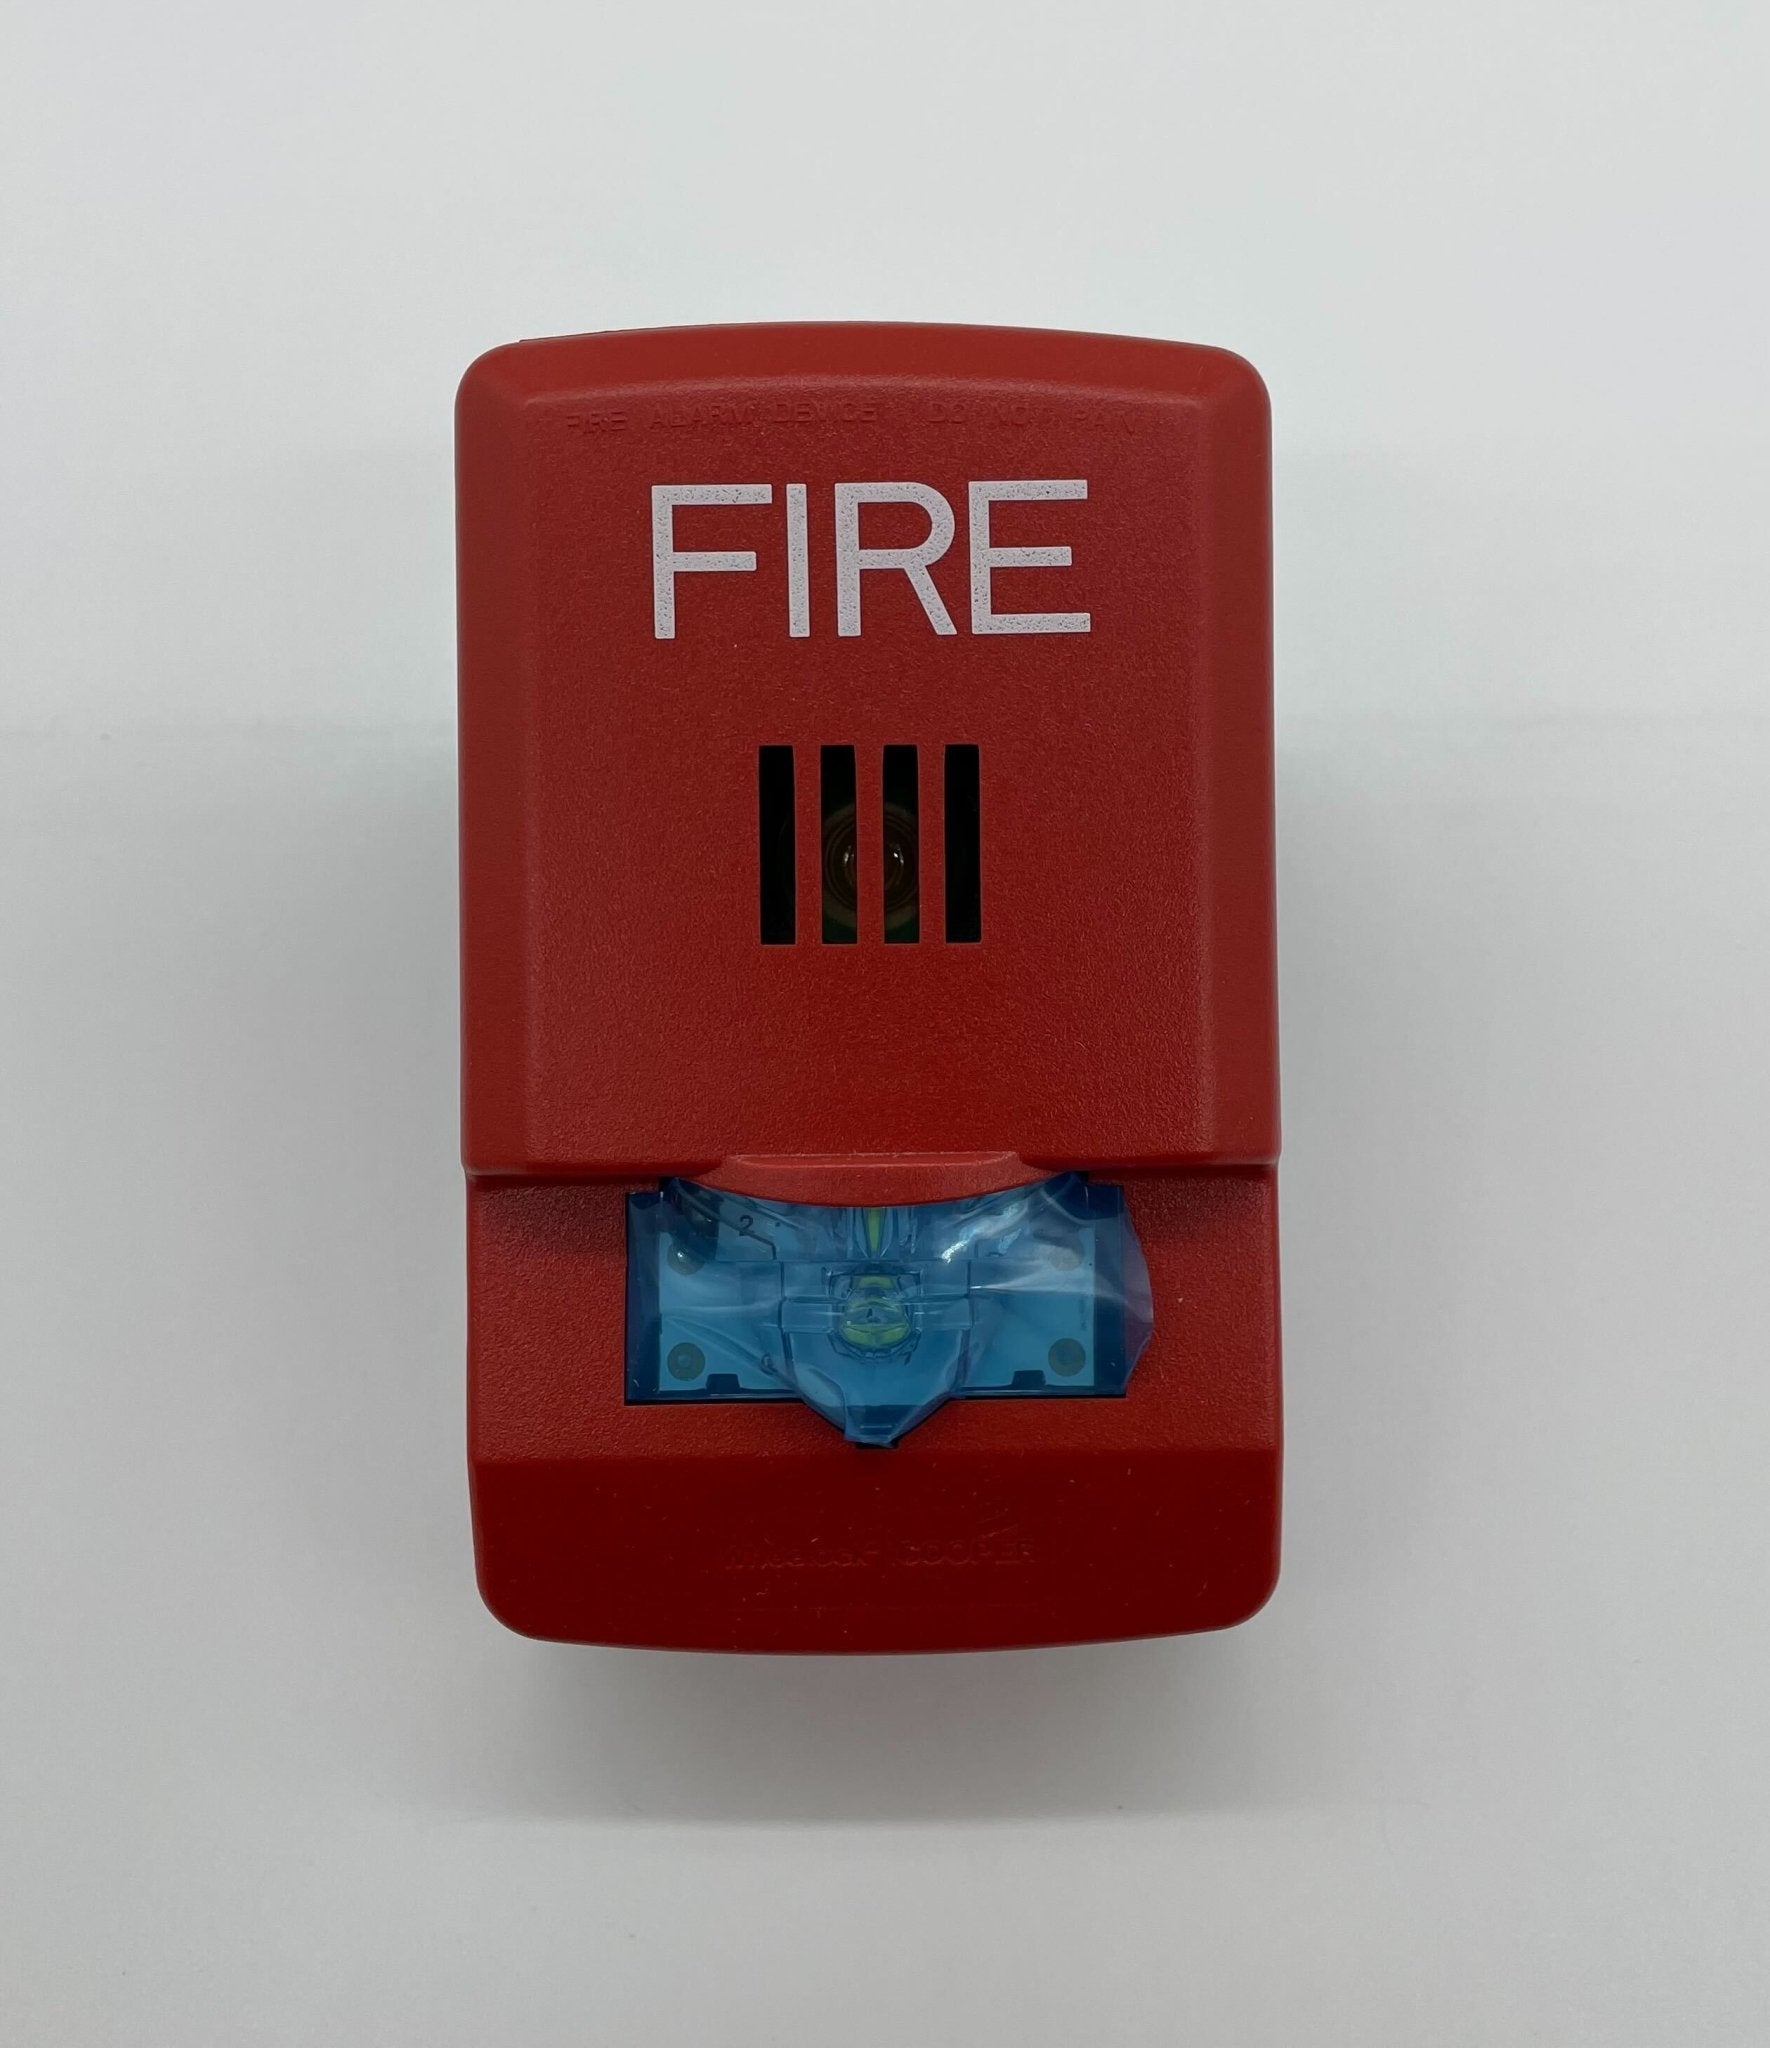 Wheelock LHSR - The Fire Alarm Supplier